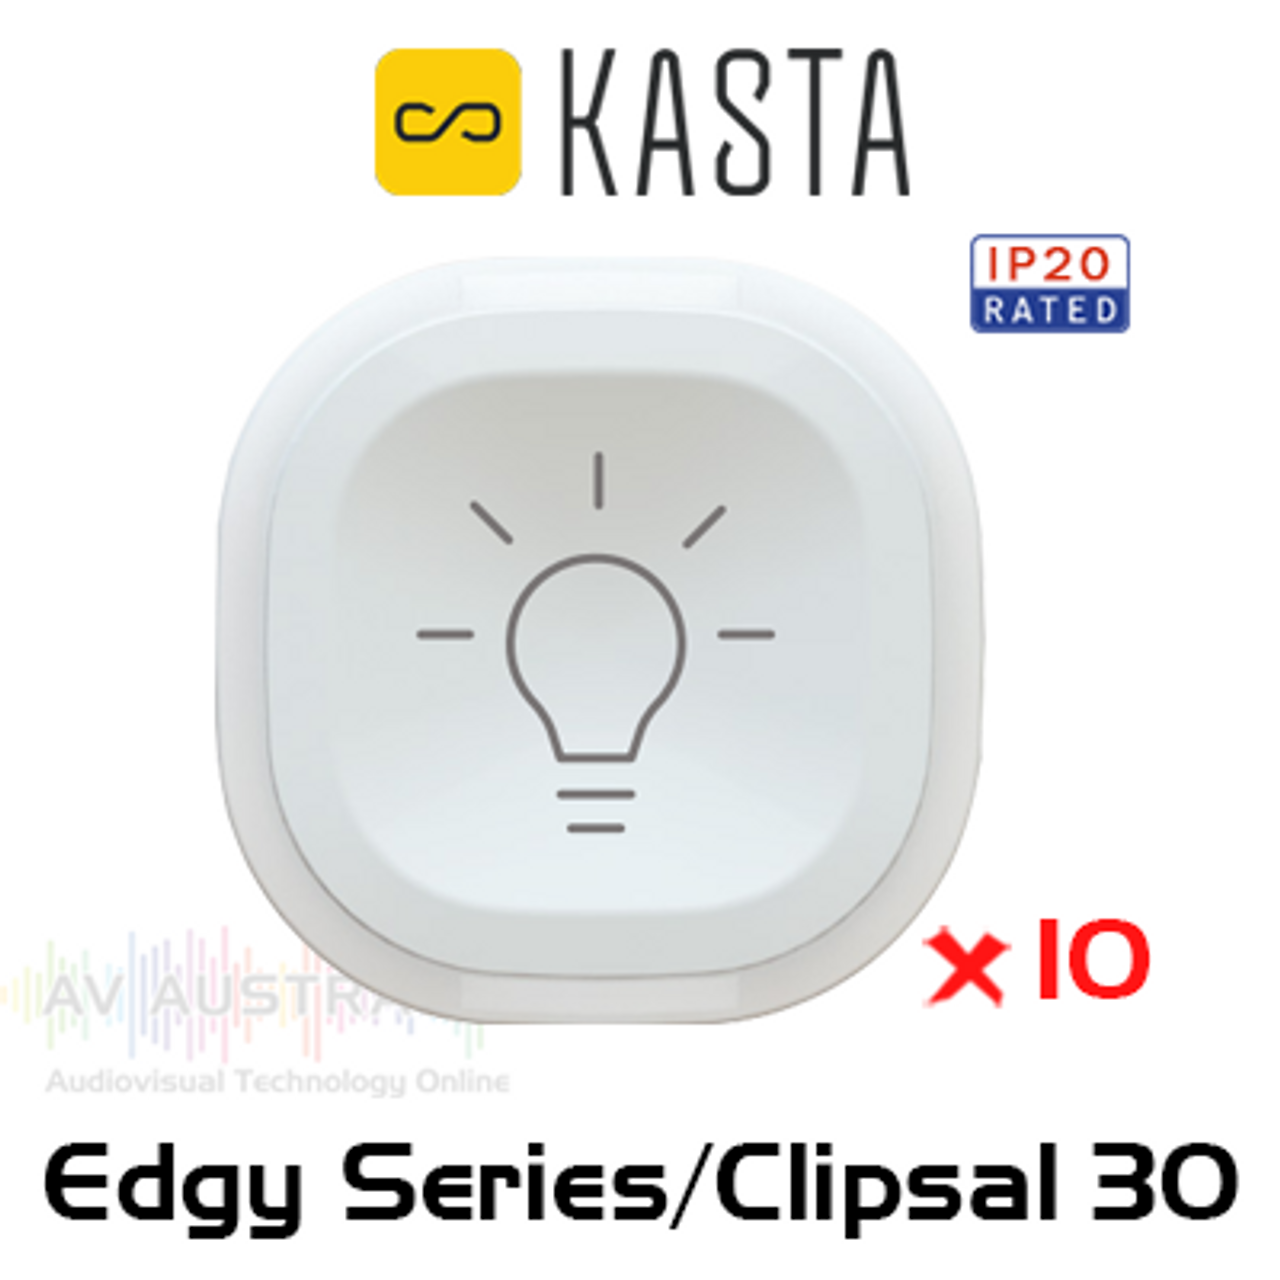 Kasta Edge Series / Clipsal 30 Pictogram Button Caps (10 pack)